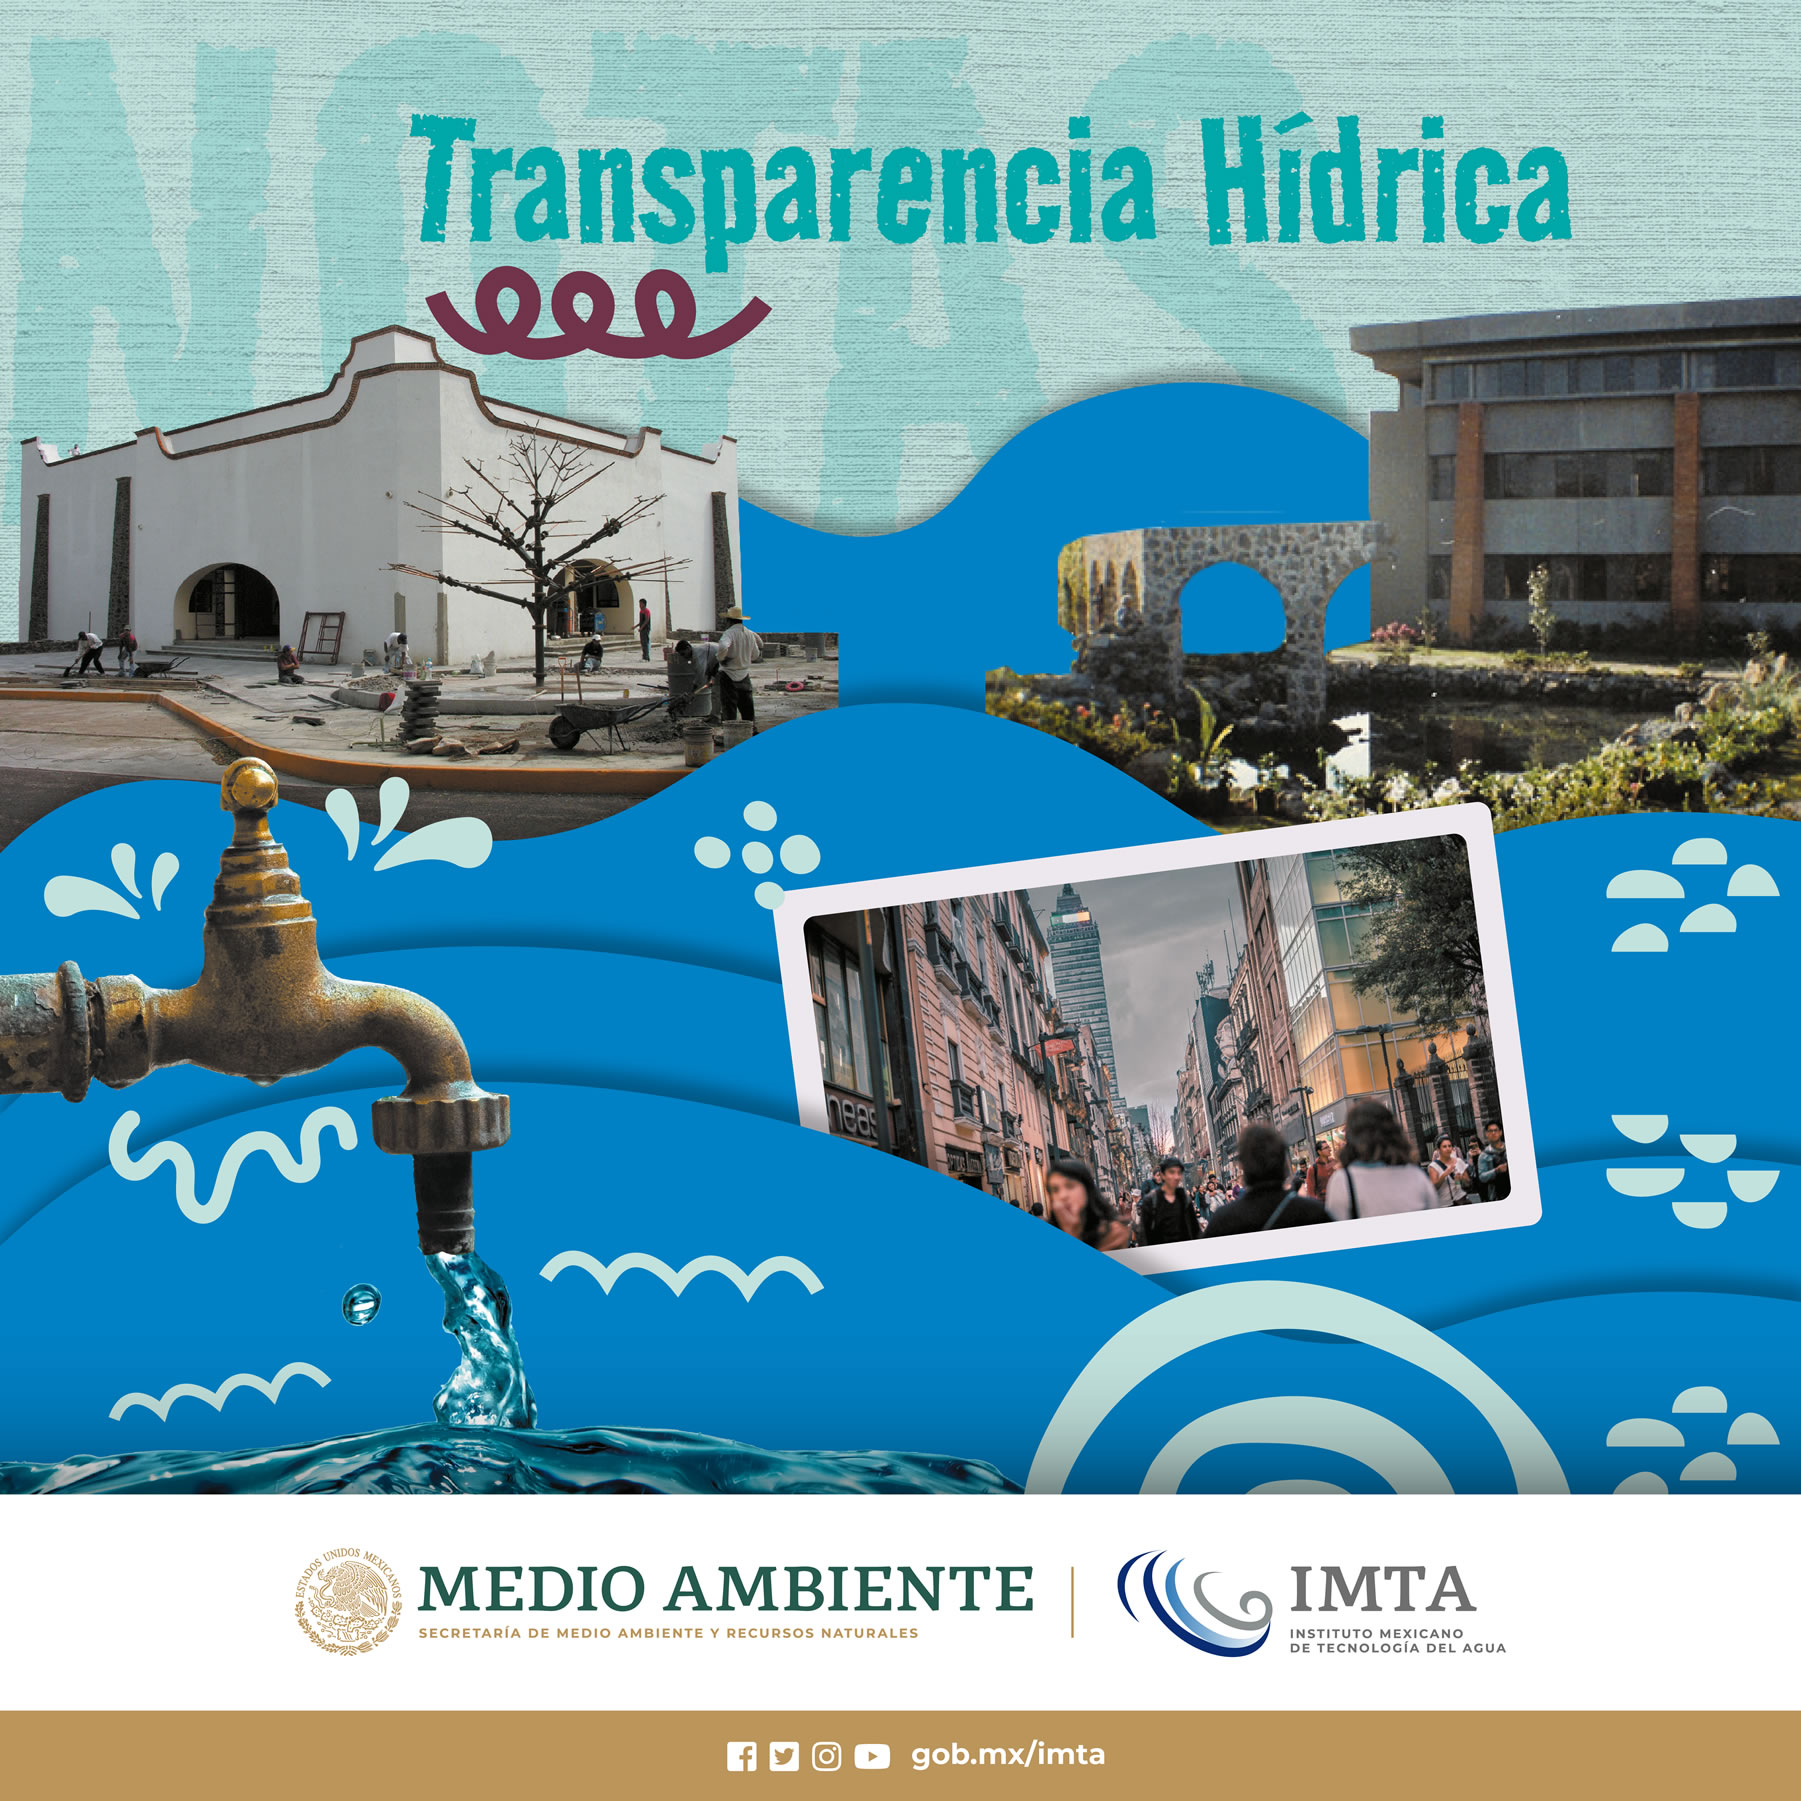 /cms/uploads/image/file/694050/Transparencia_Hidrica_2.jpg